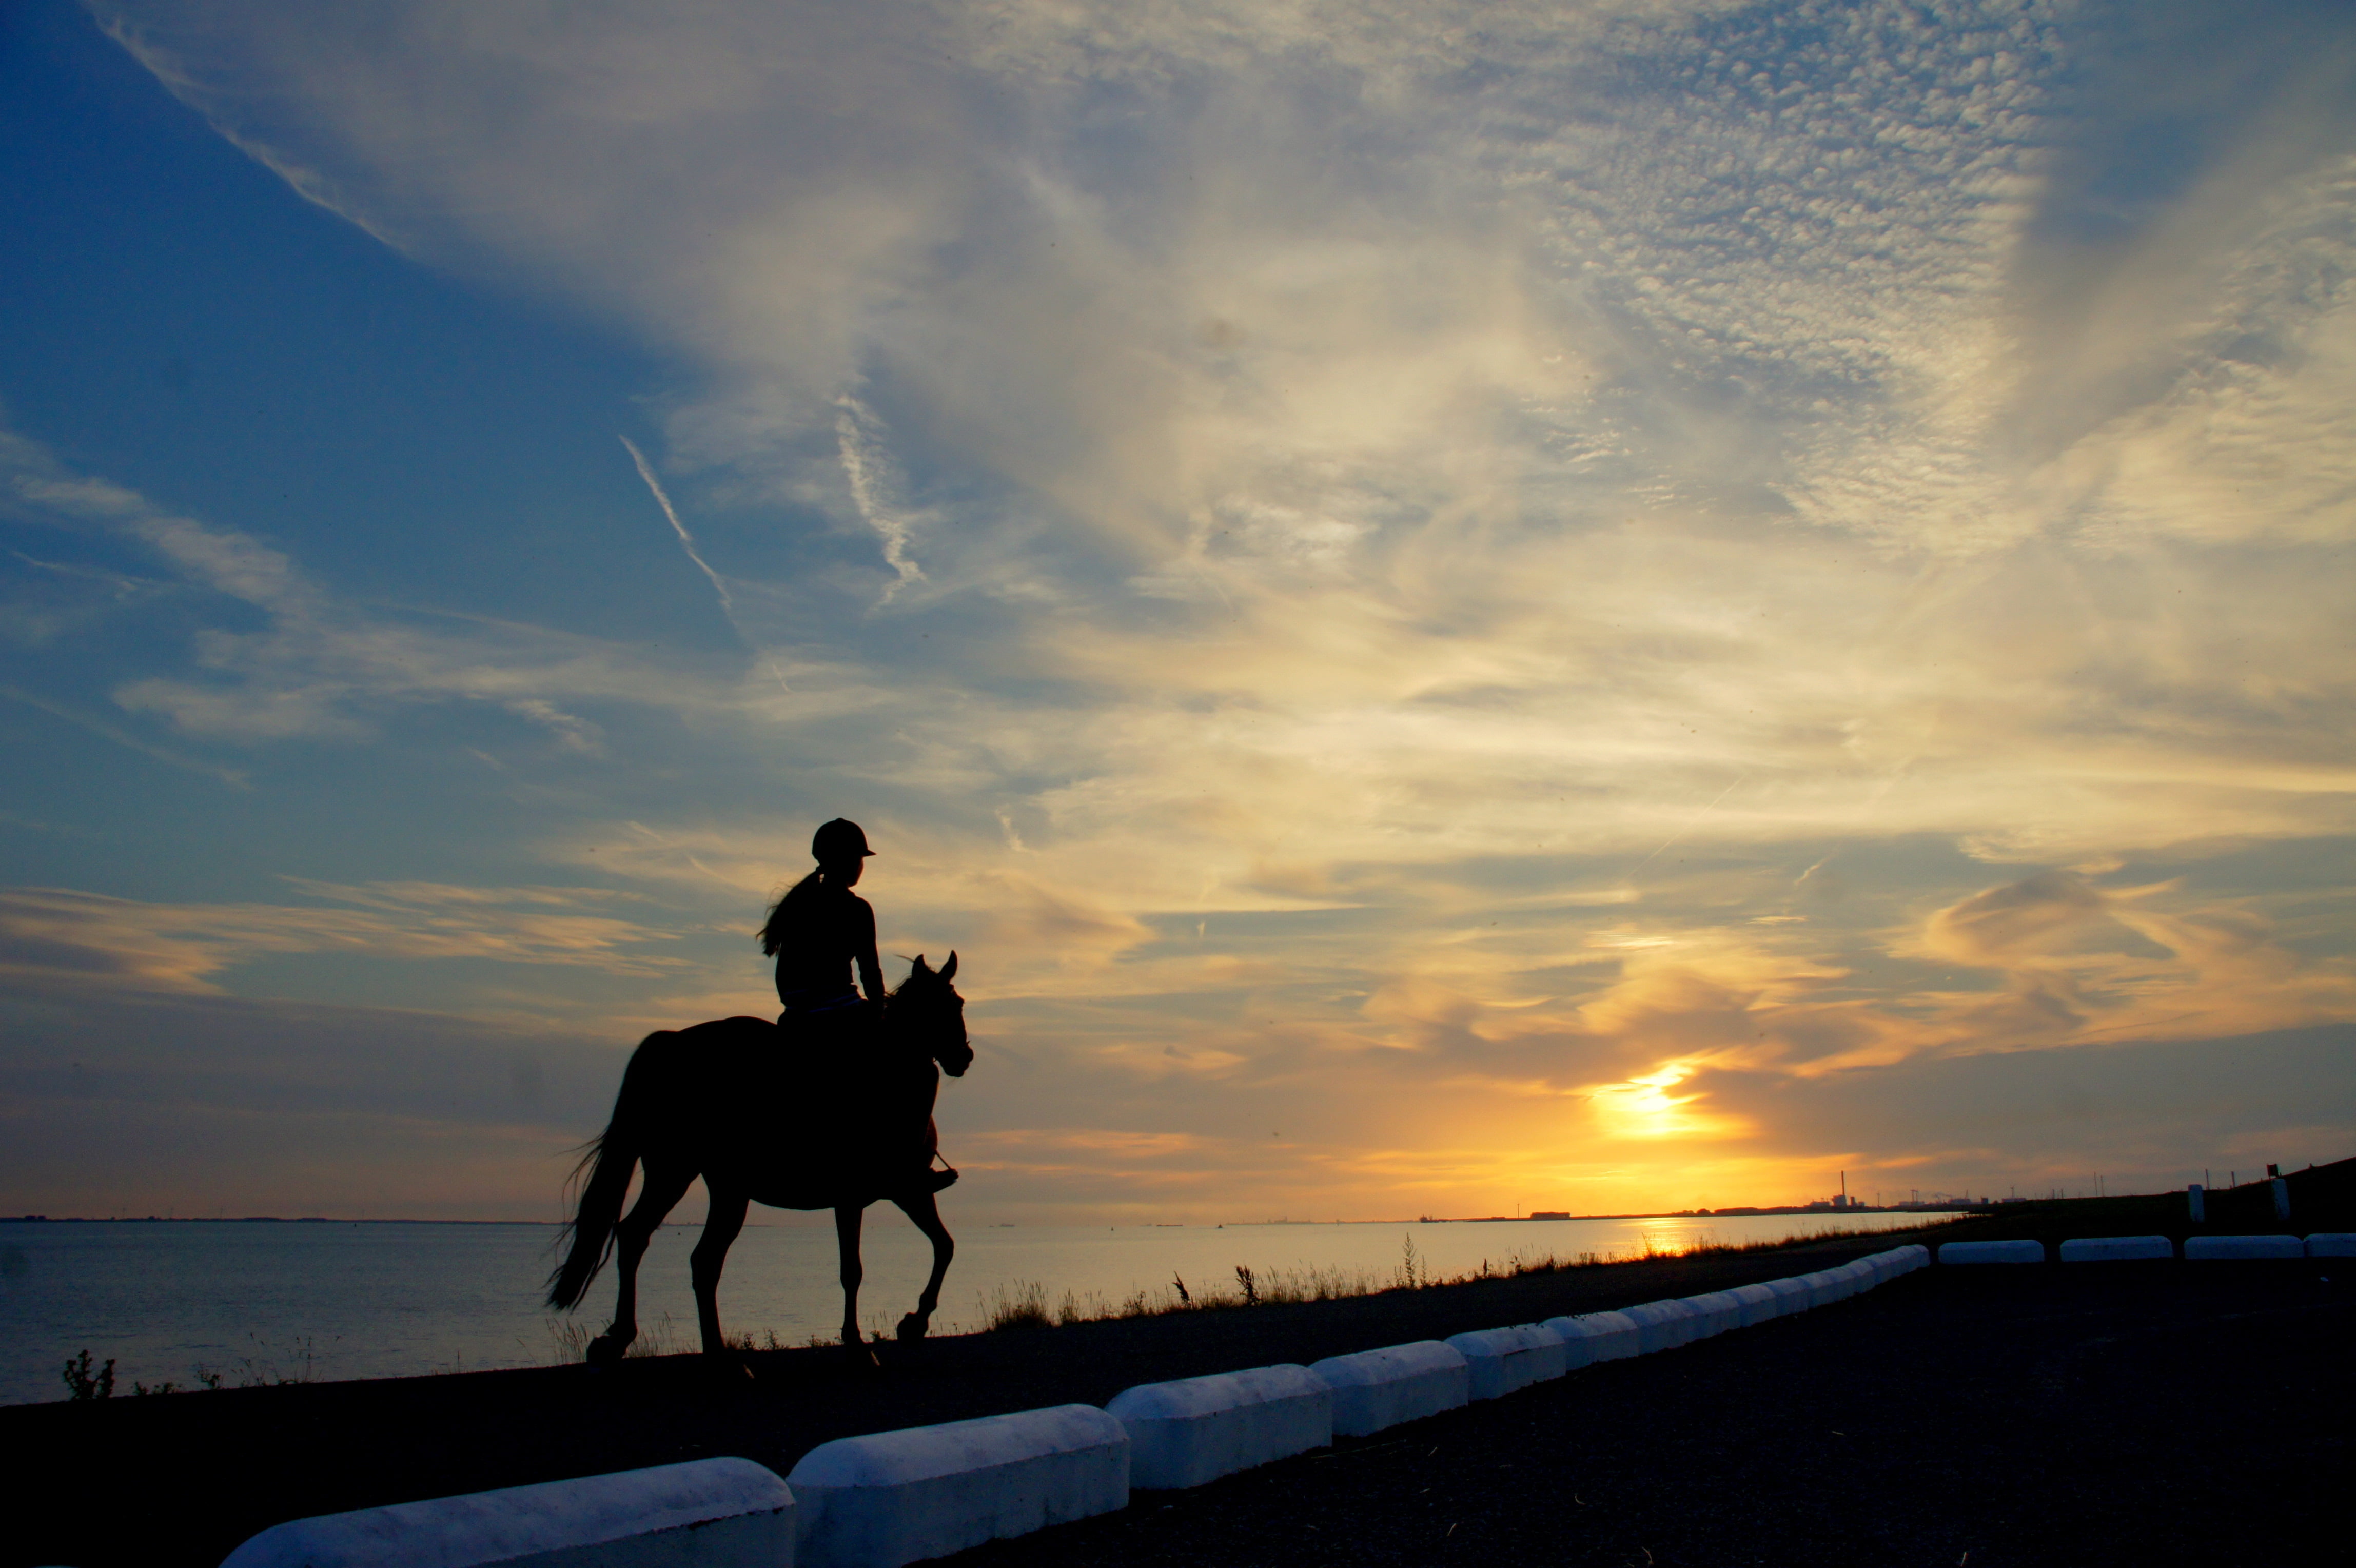 silhouette of person on horse, horseback rider, girl, lake, borders